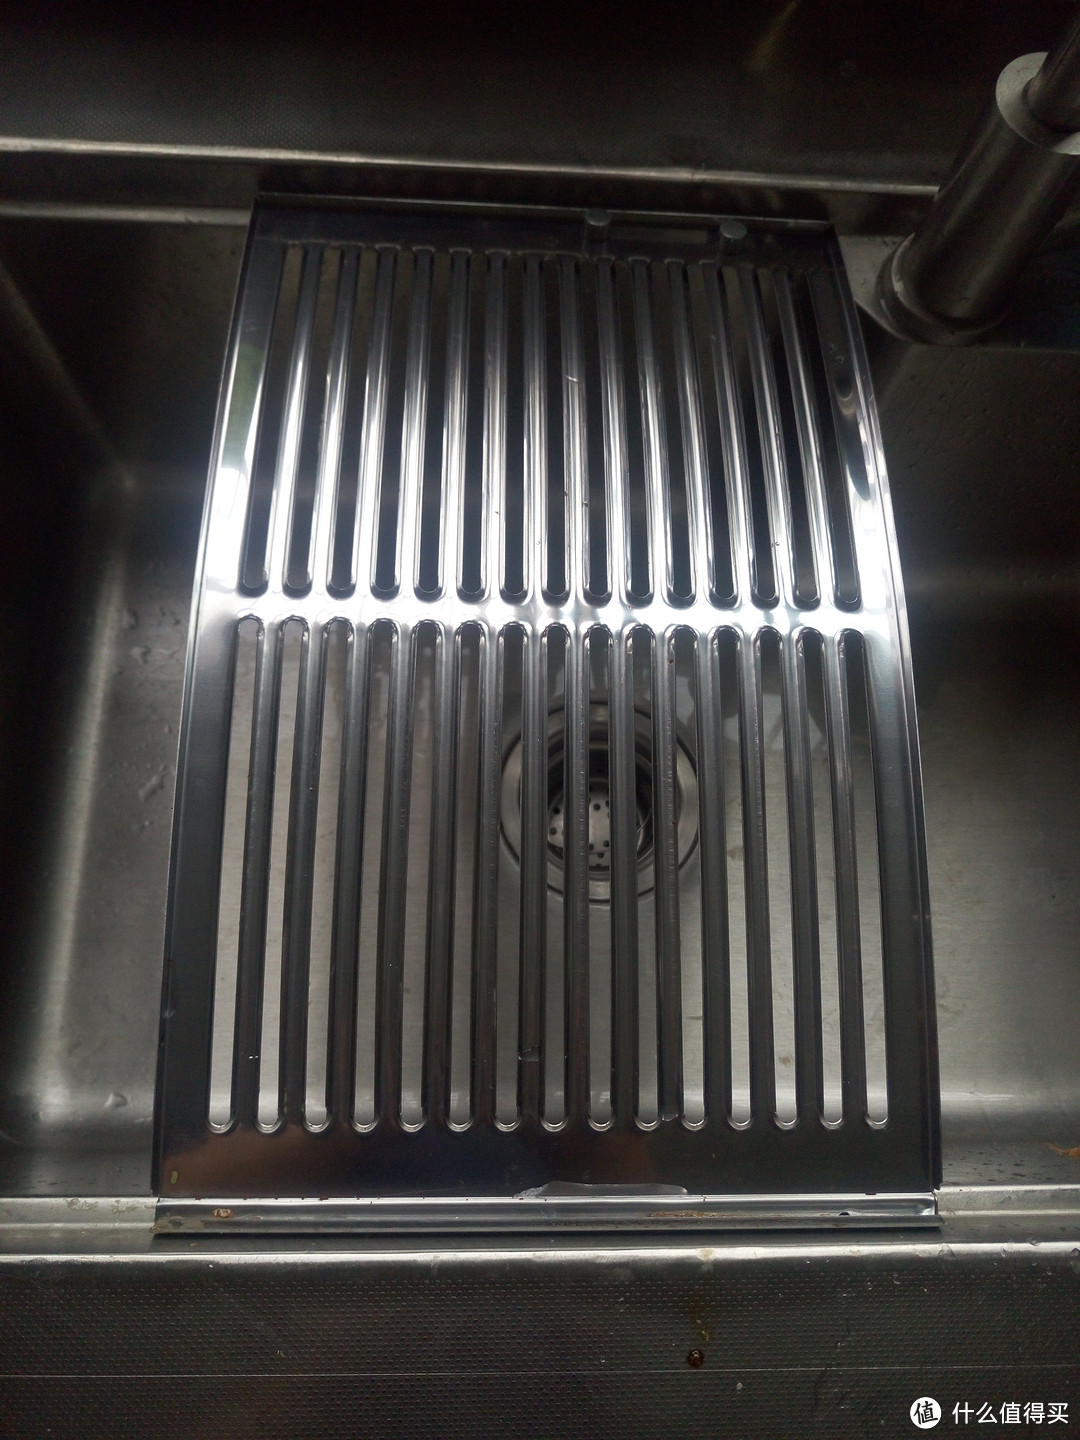 SIEMENS 西门子 73M810TI 洗碗机 安装和初步使用